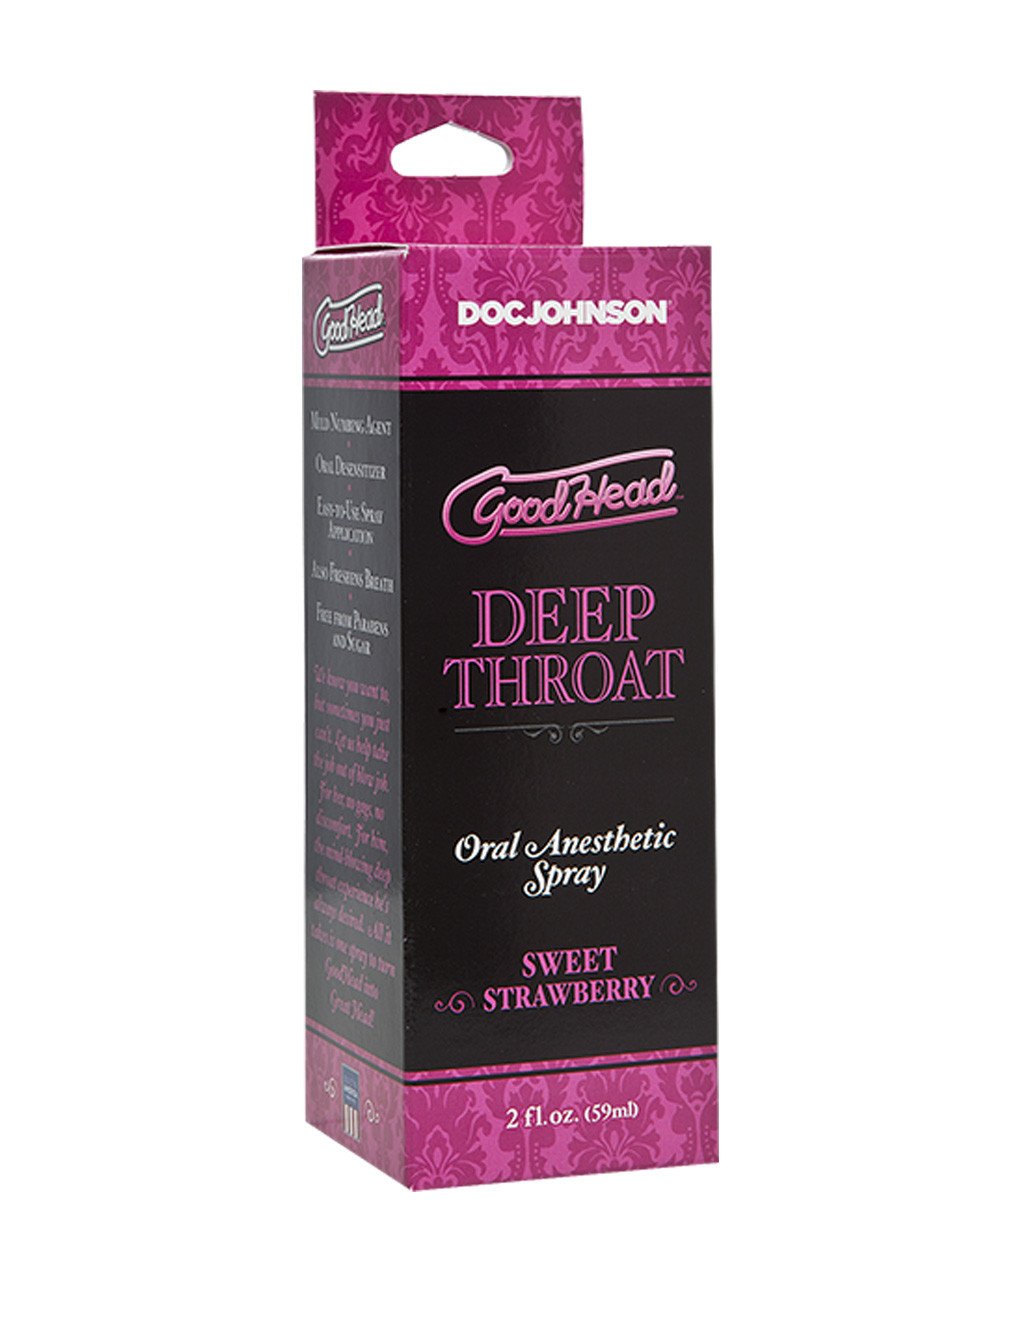 Goodhead Deep Throat Desensitizing Spray- Strawberry- Box